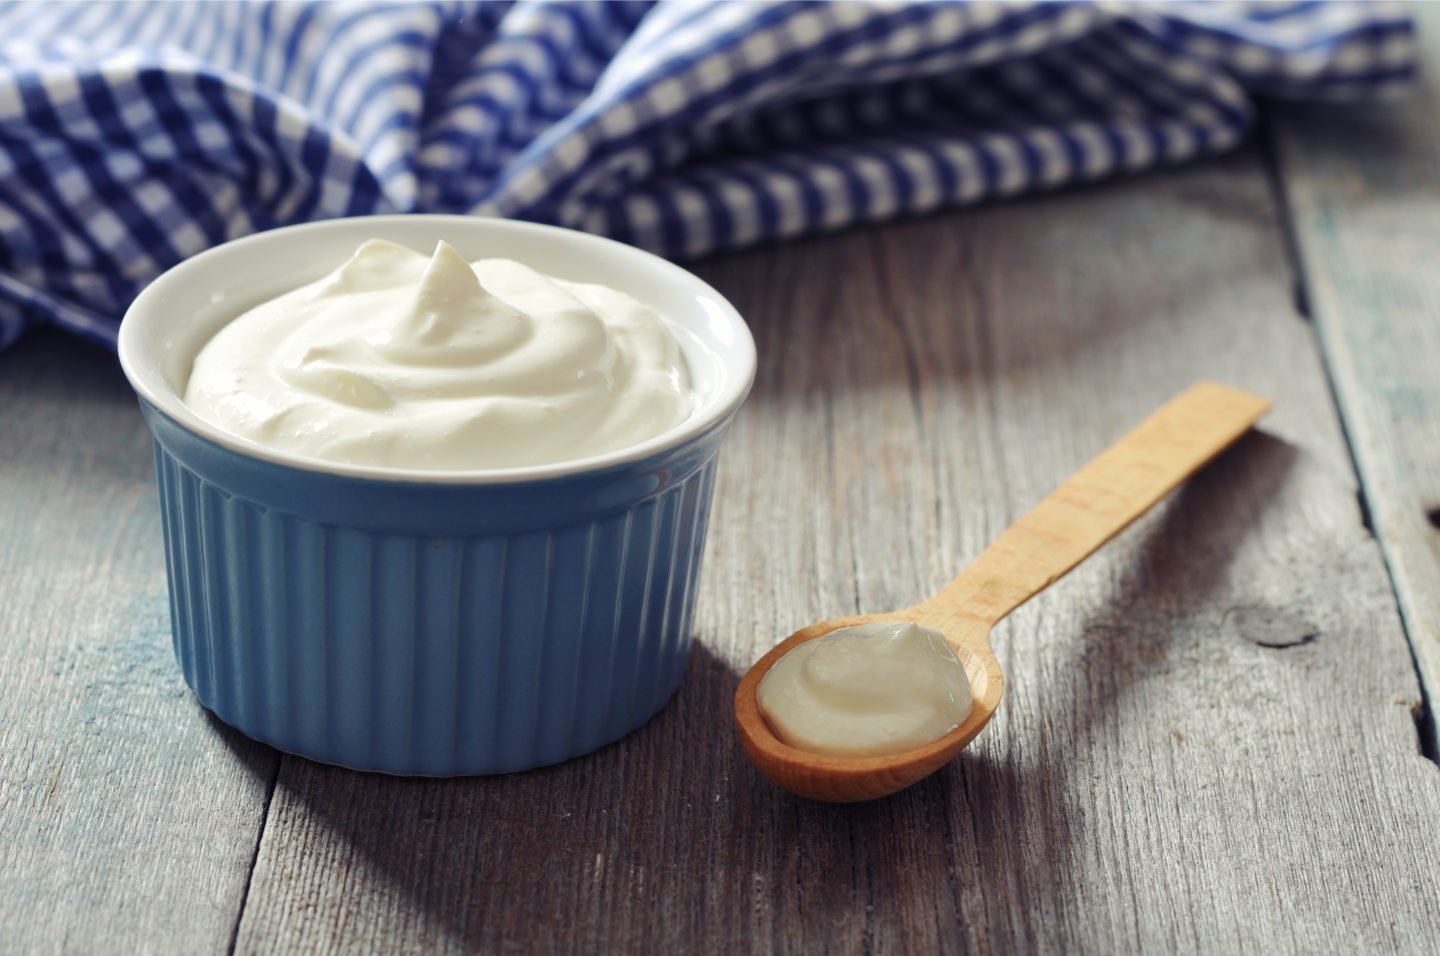 Greek Yogurt In Blue Bowl And Wooden Spoon